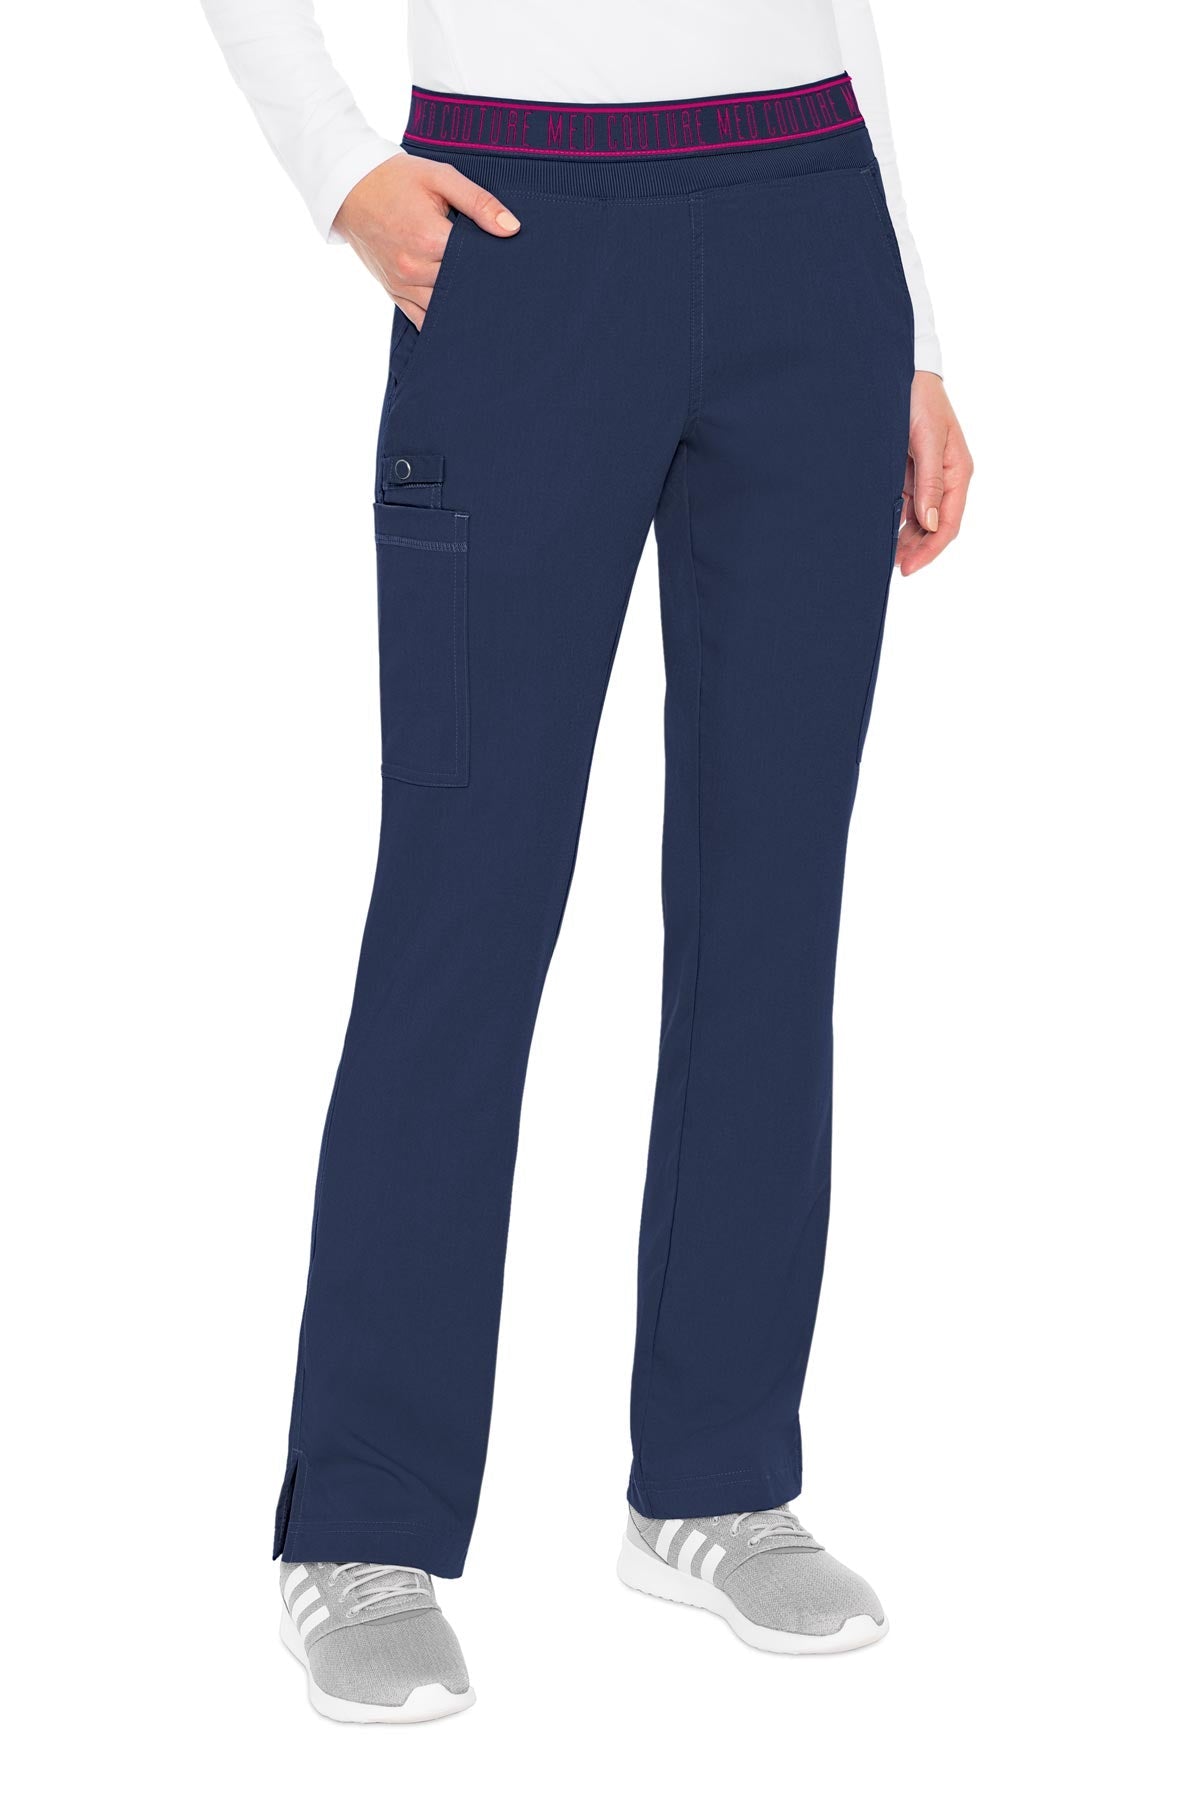 Yoga 2 Cargo Pocket Pant - Touch - Med Couture - Brands - Metro Uniforms -  Nursing Uniforms, Wink